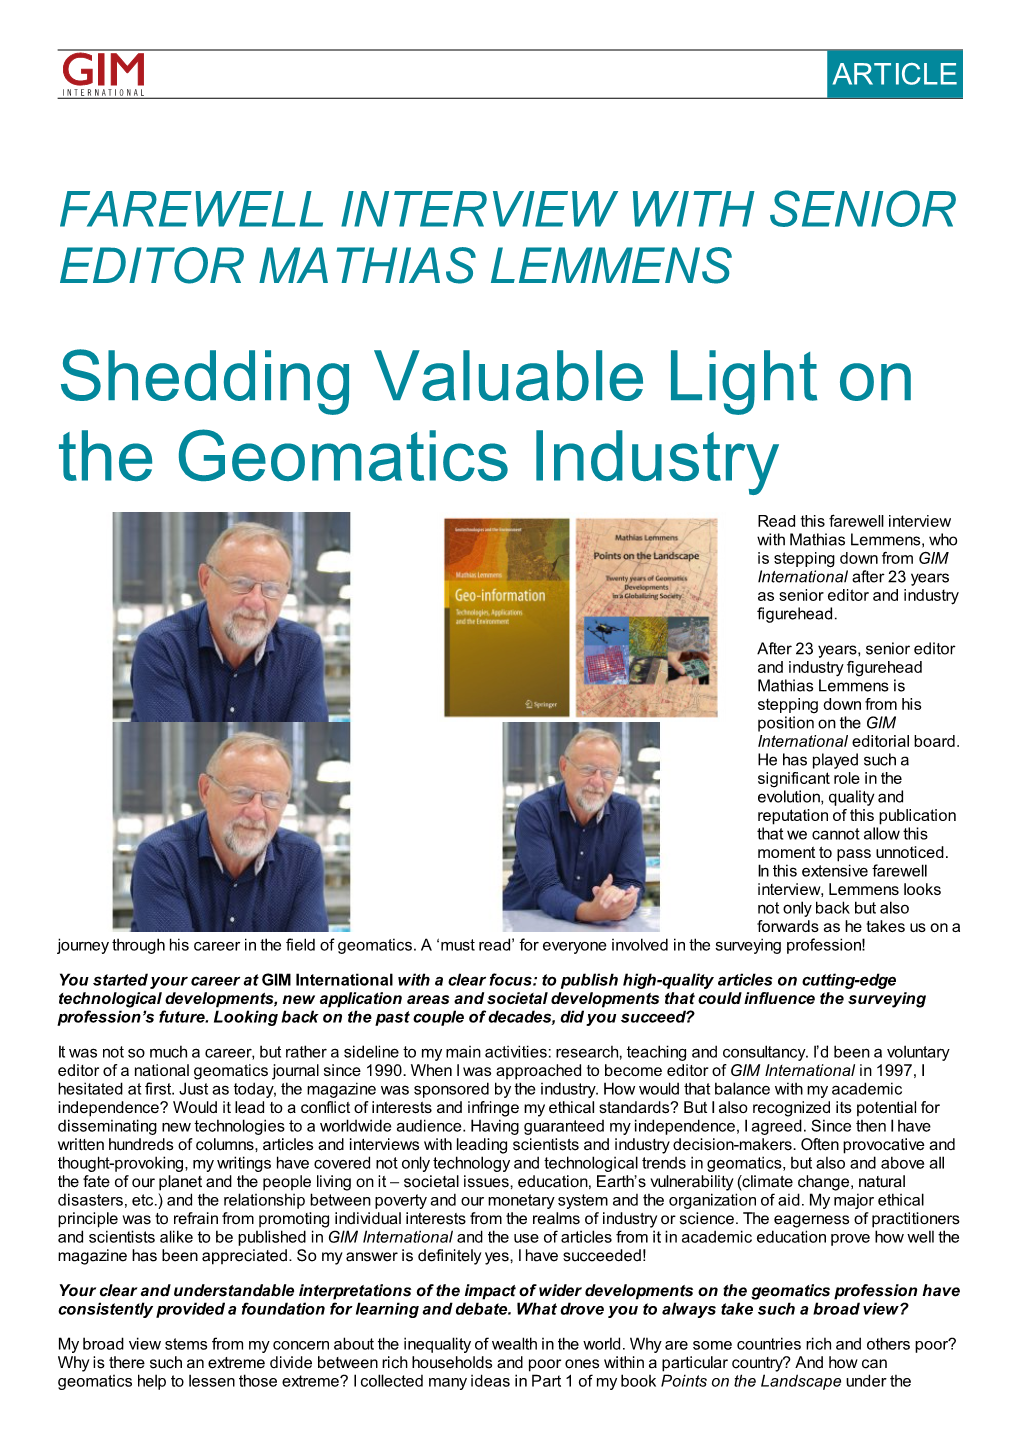 Shedding Valuable Light on the Geomatics Industry